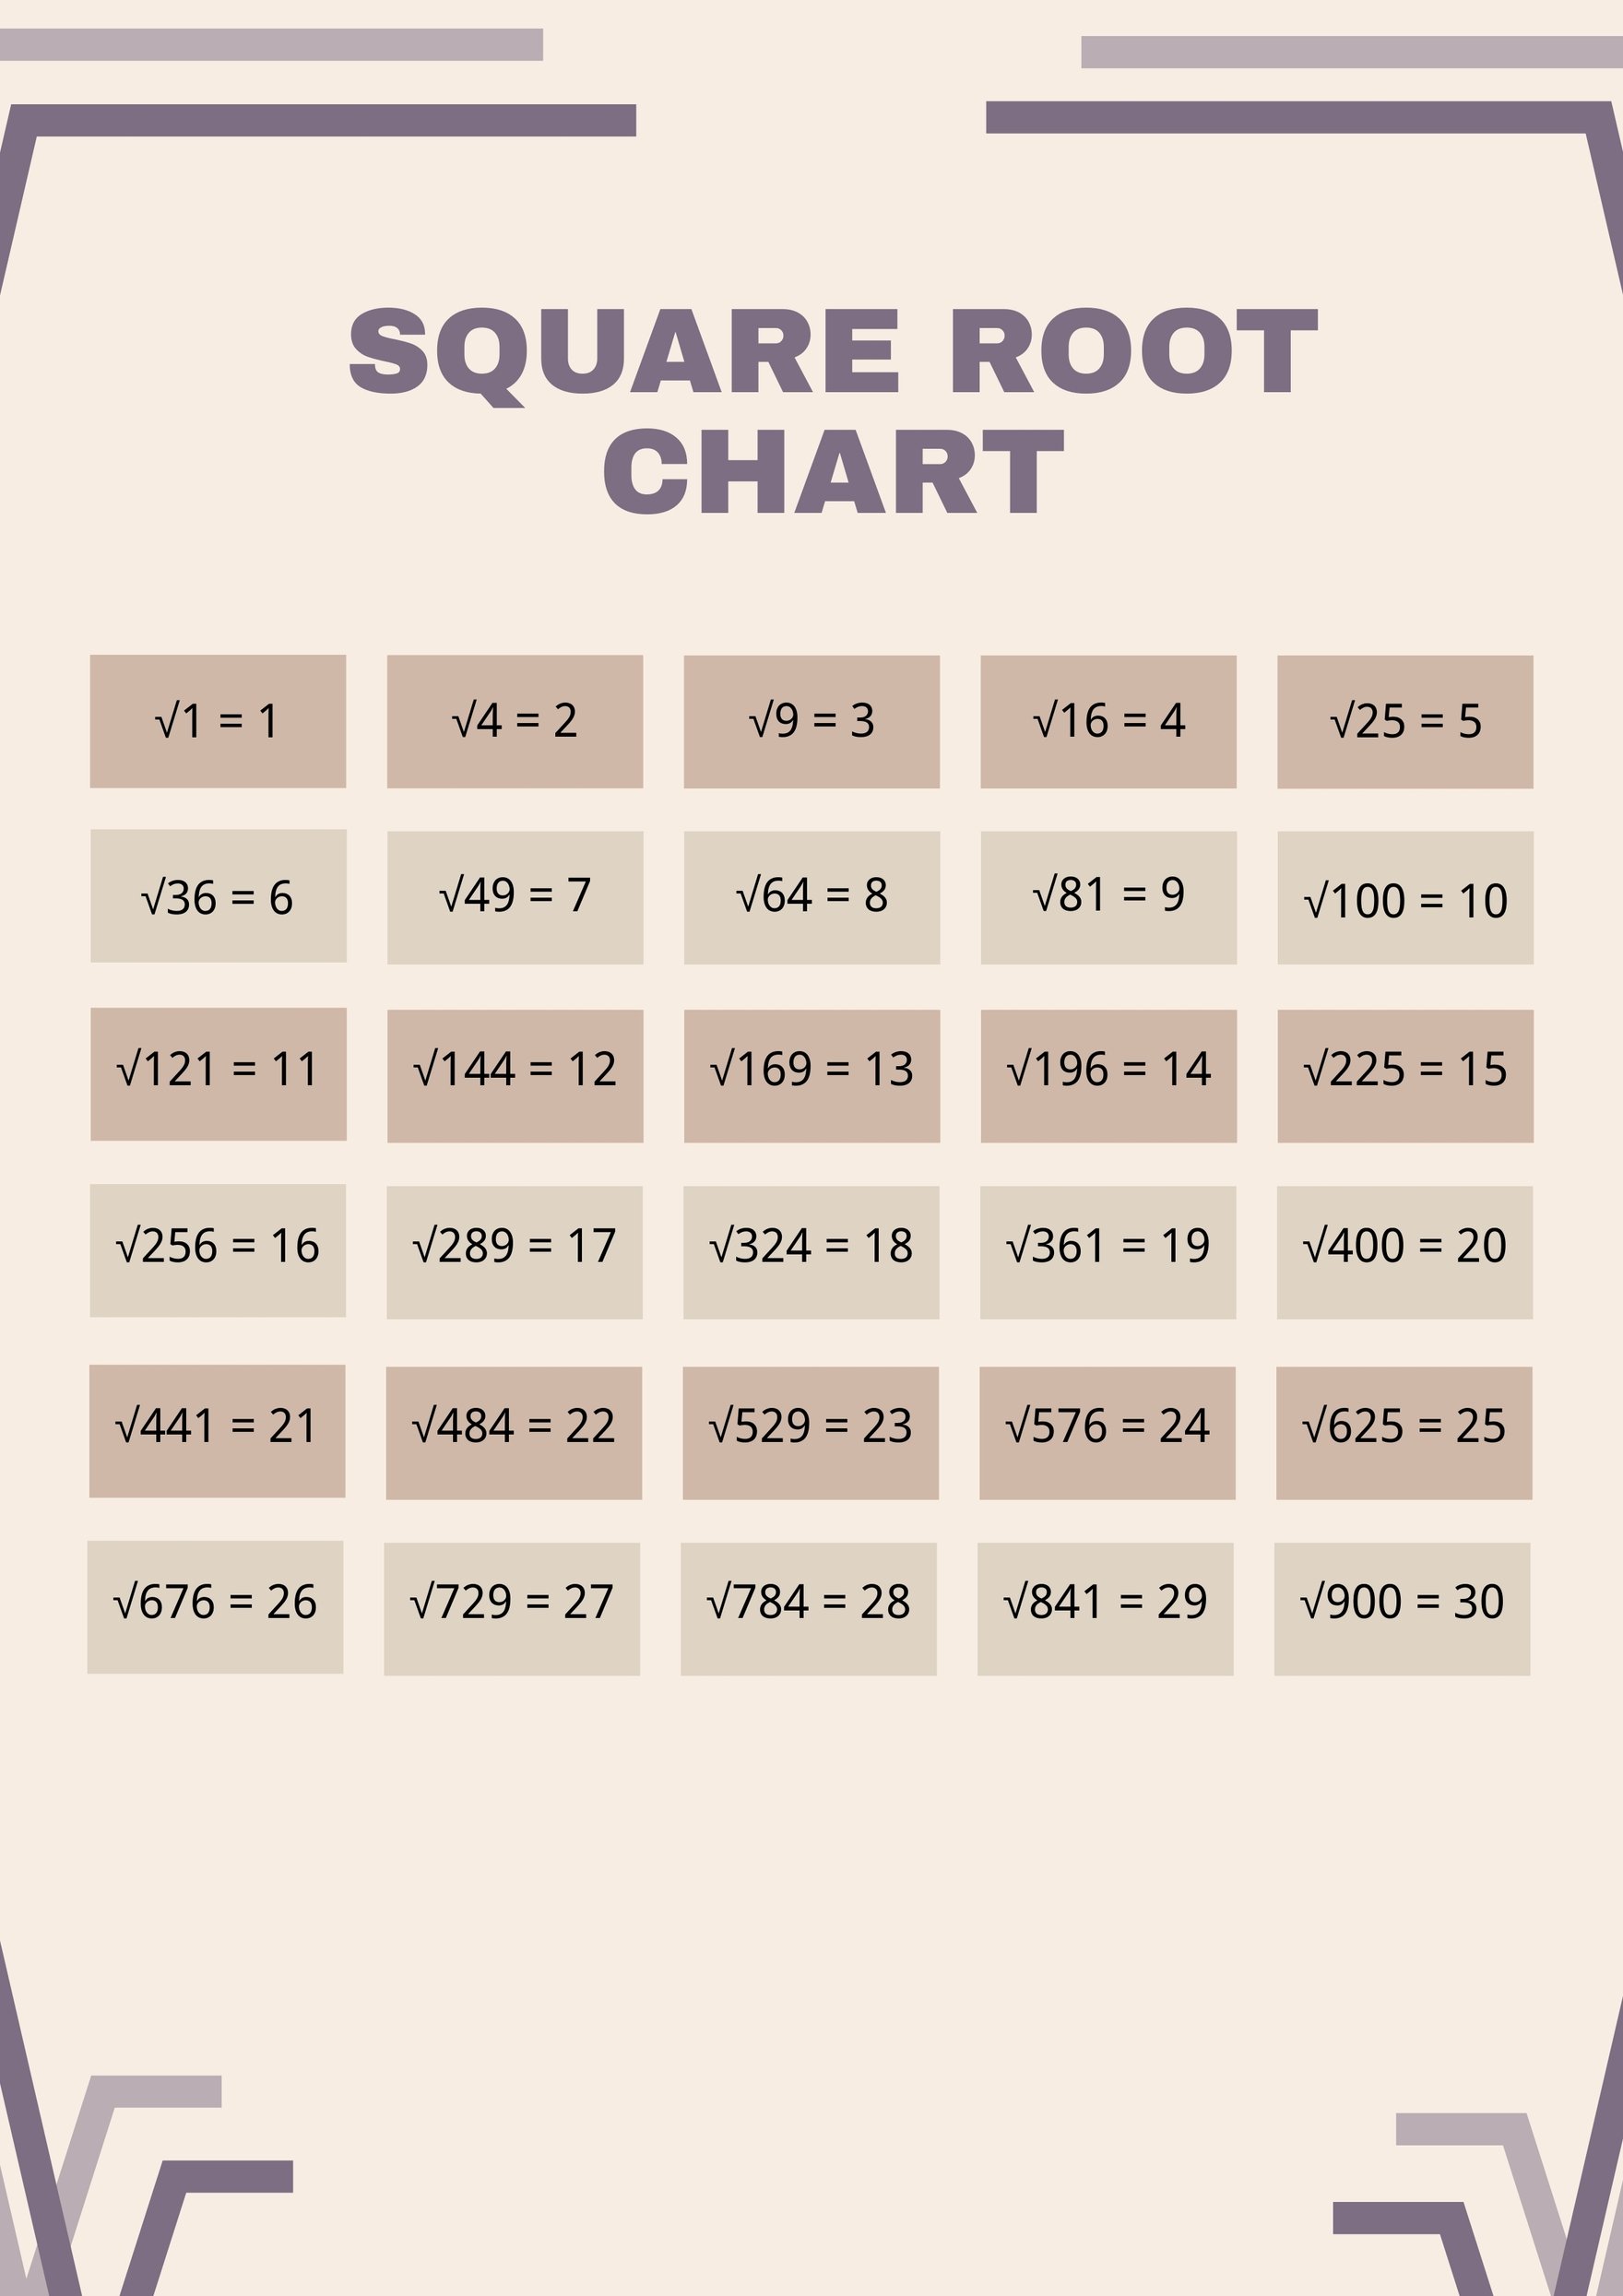 Square Root Chart in PDF, Illustrator